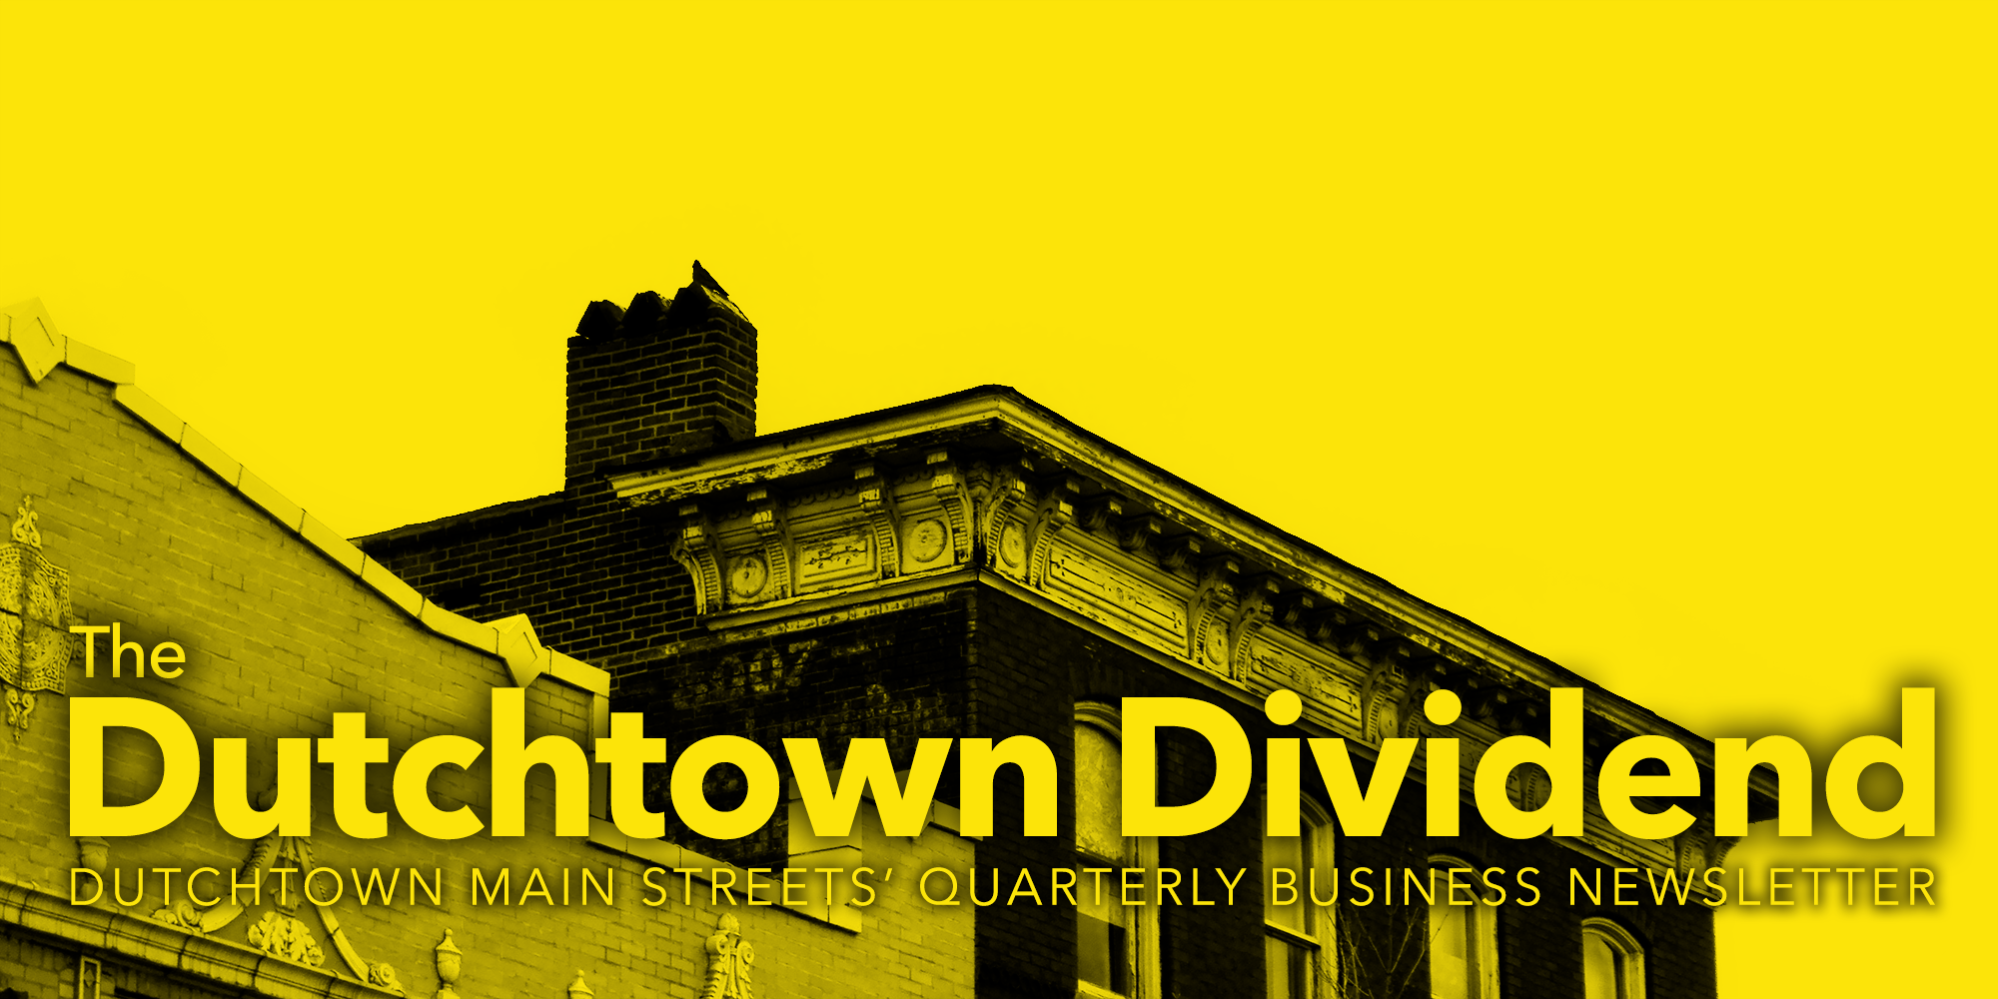 The Dutchtown Dividend, Dutchtown Main Streets' quarterly business newsletter.